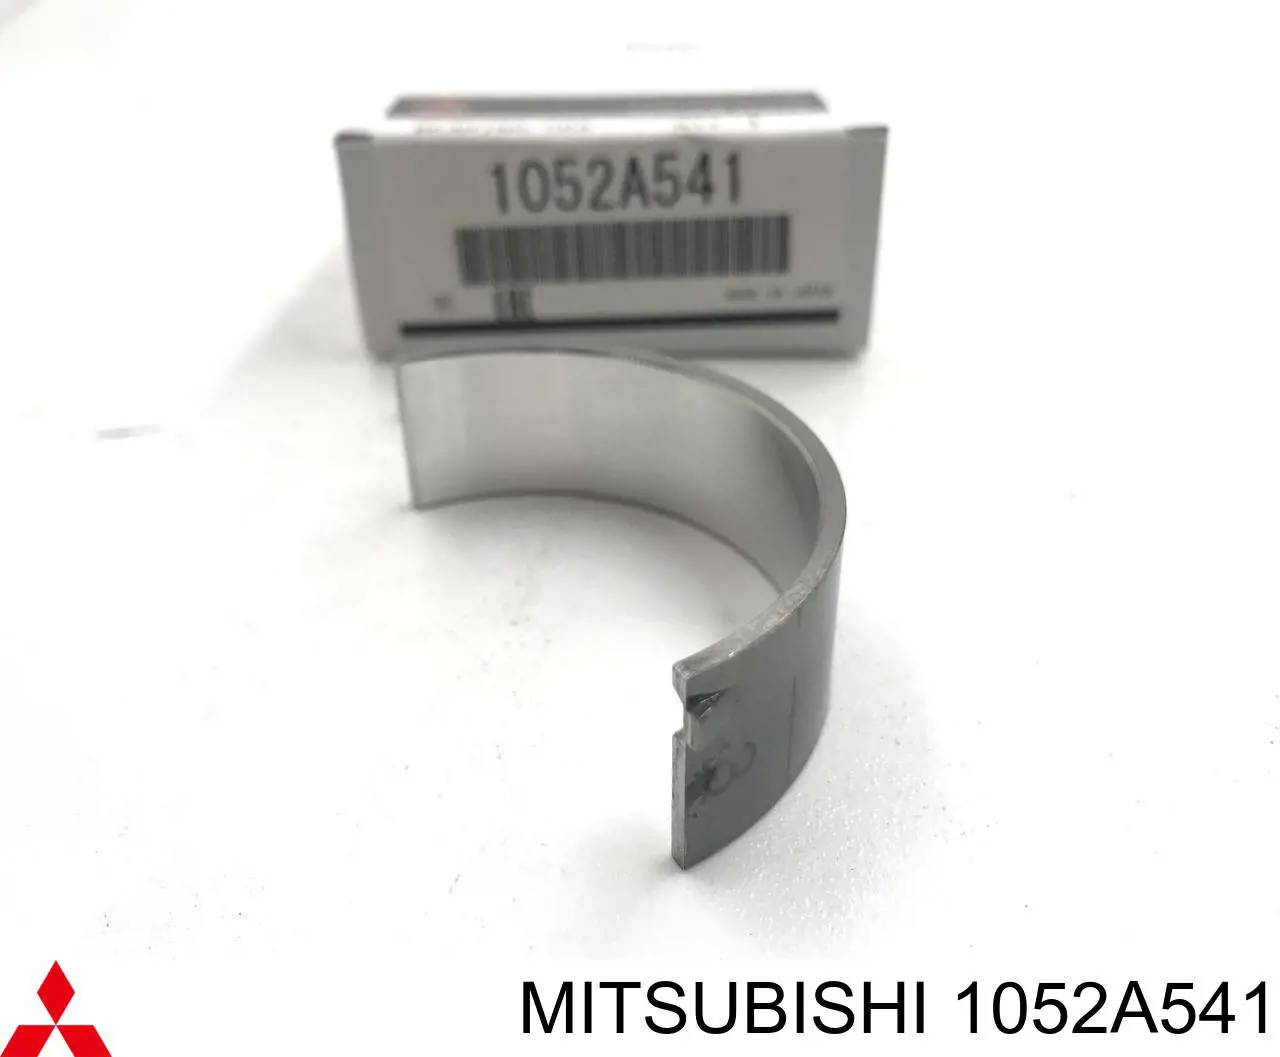 1052A541 Mitsubishi вкладыши коленвала коренные, комплект, стандарт (std)